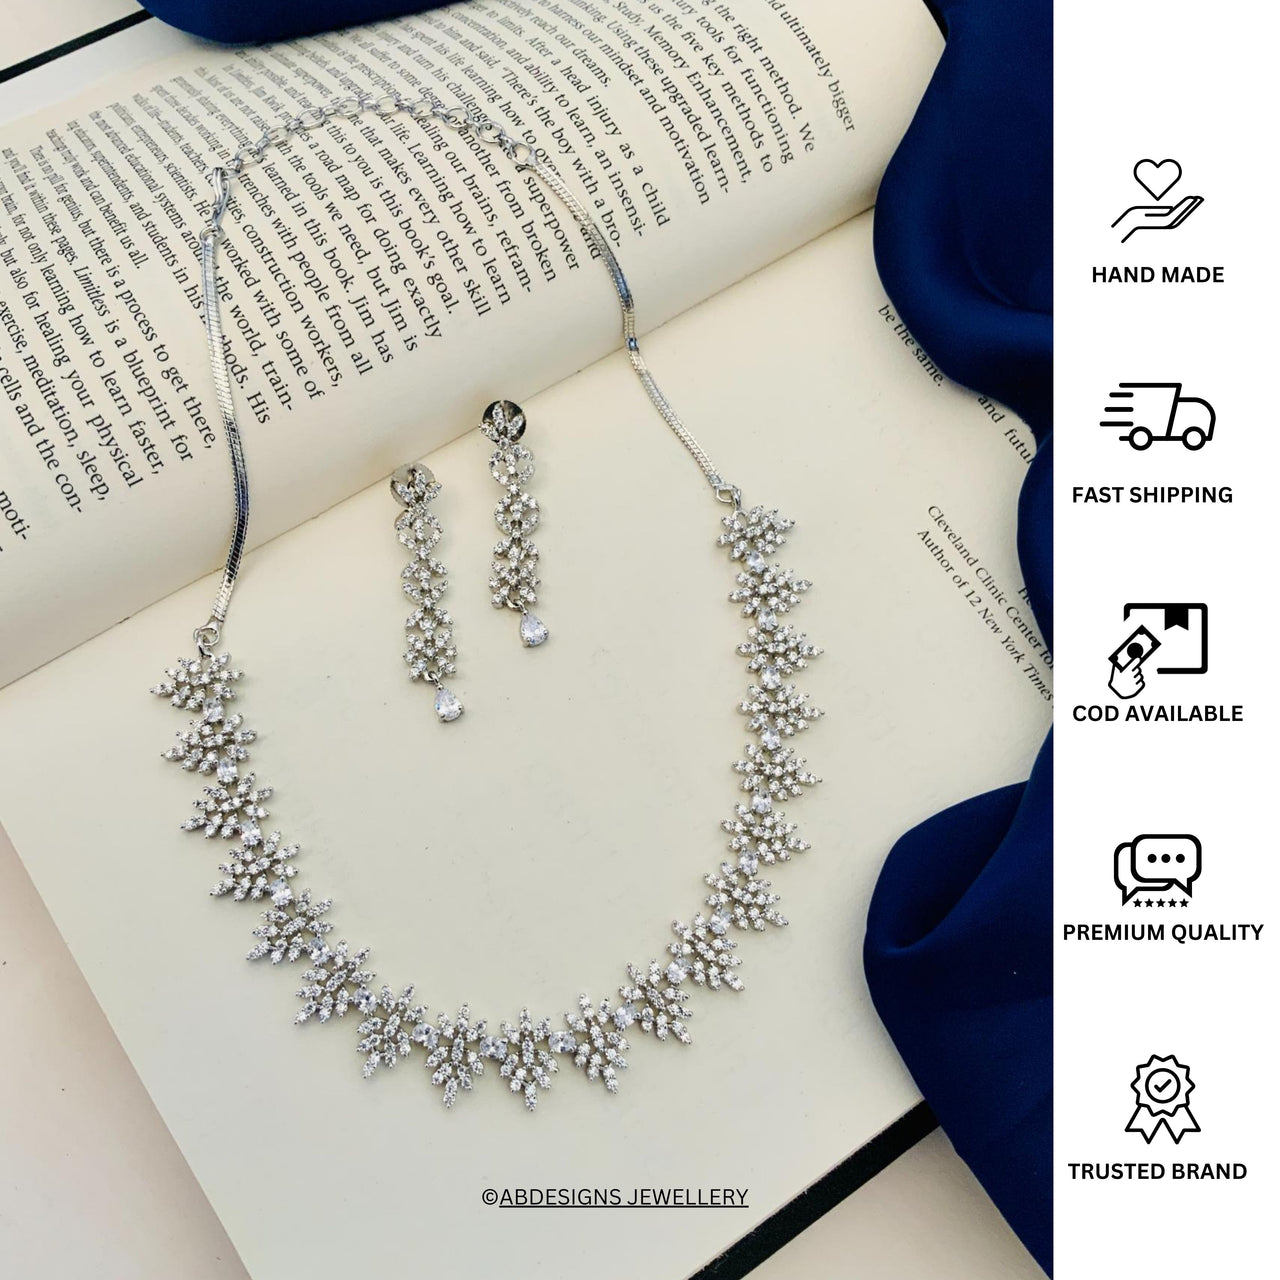 Abdesigns Necklace Collection